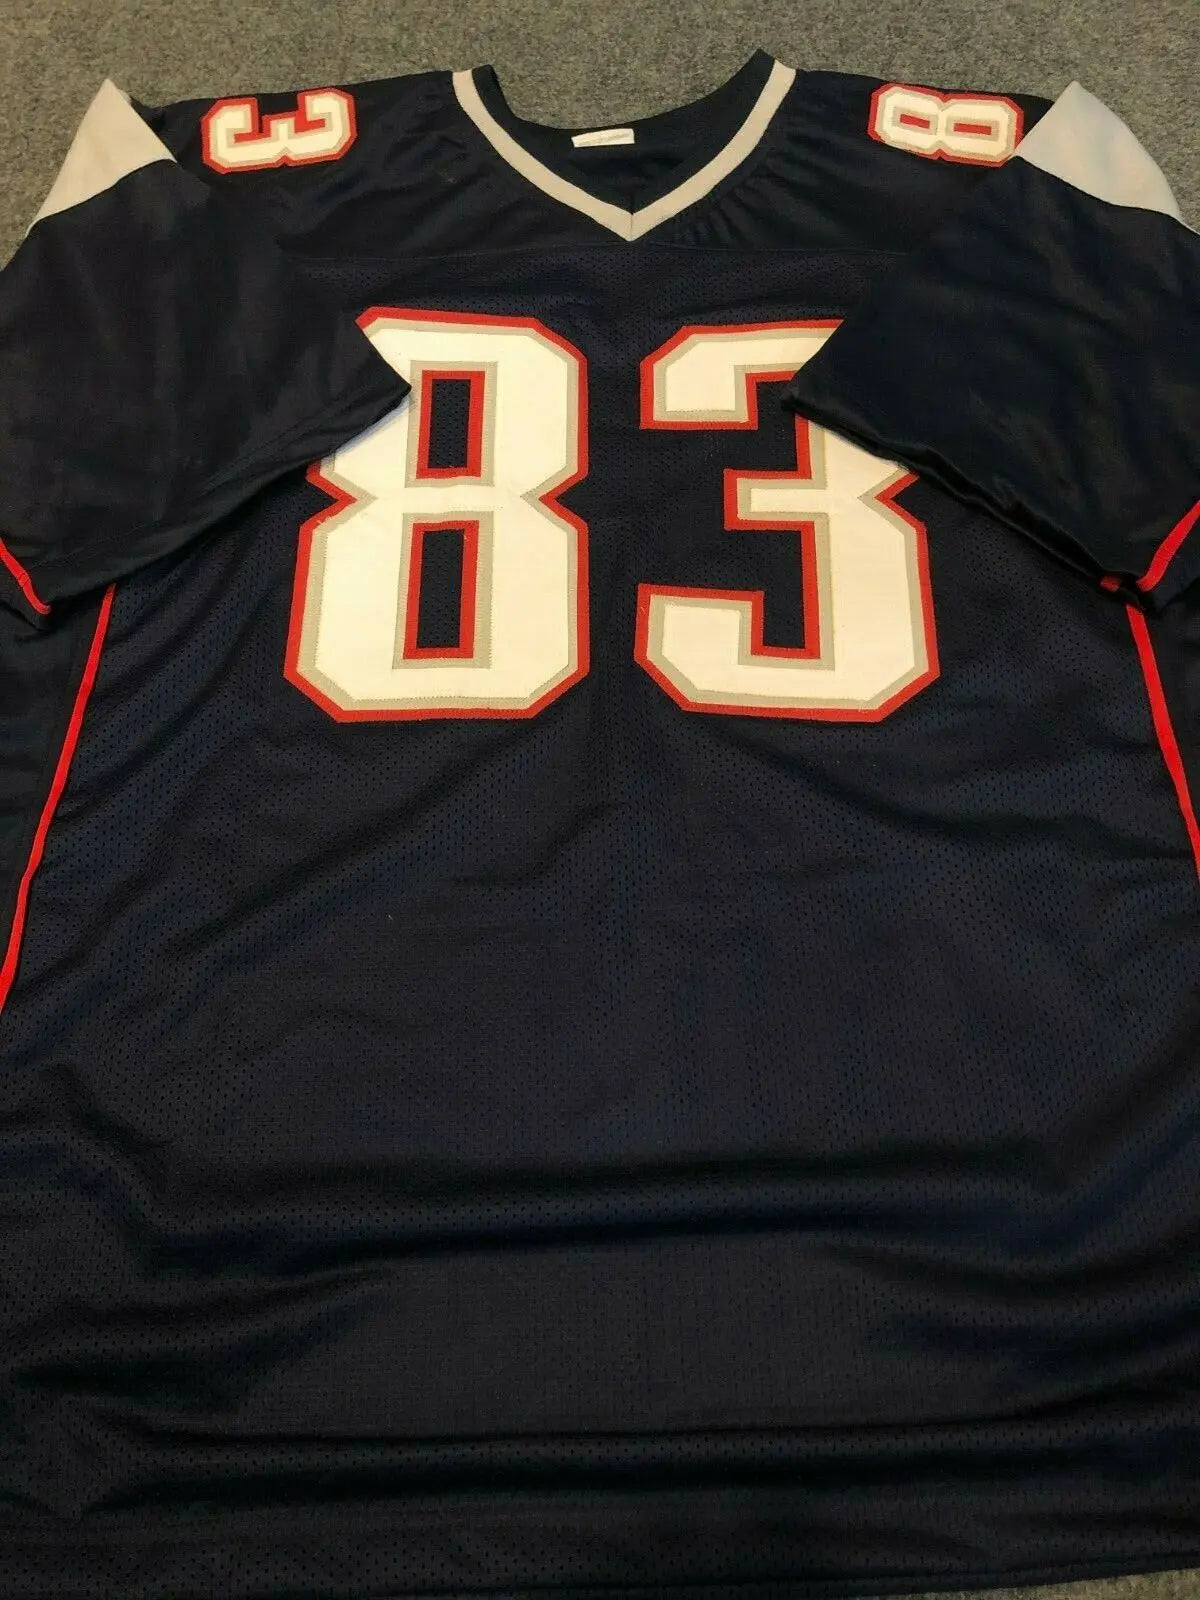 MVP Authentics New England Patriots Matt Lacosse Autographed Signed Jersey Jsa  Coa 107.10 sports jersey framing , jersey framing